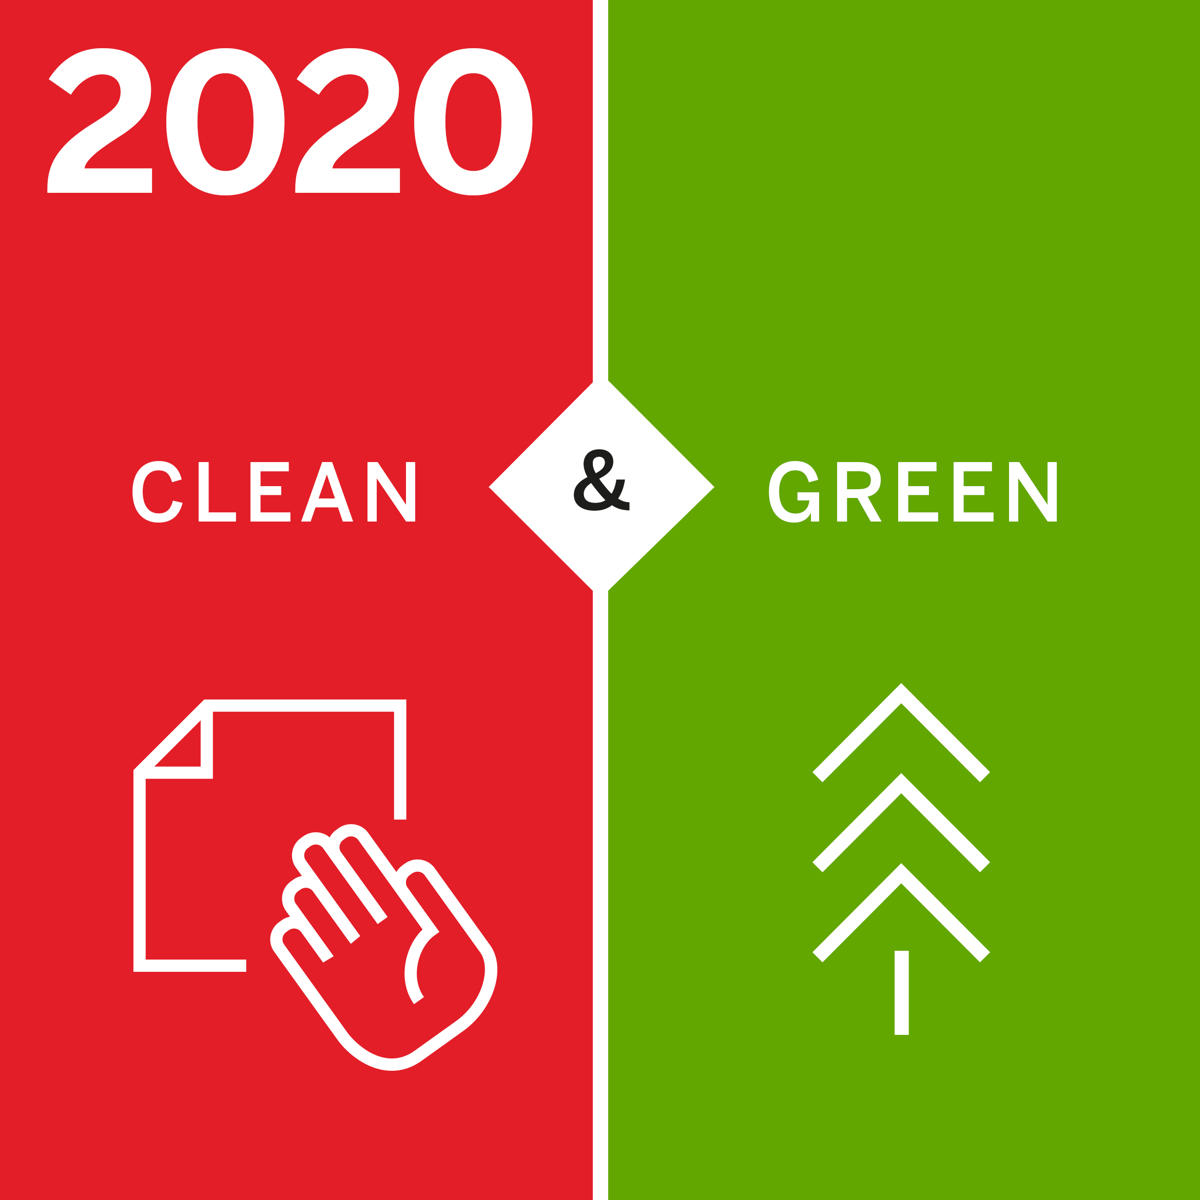 Clean & Green-konceptet skapades